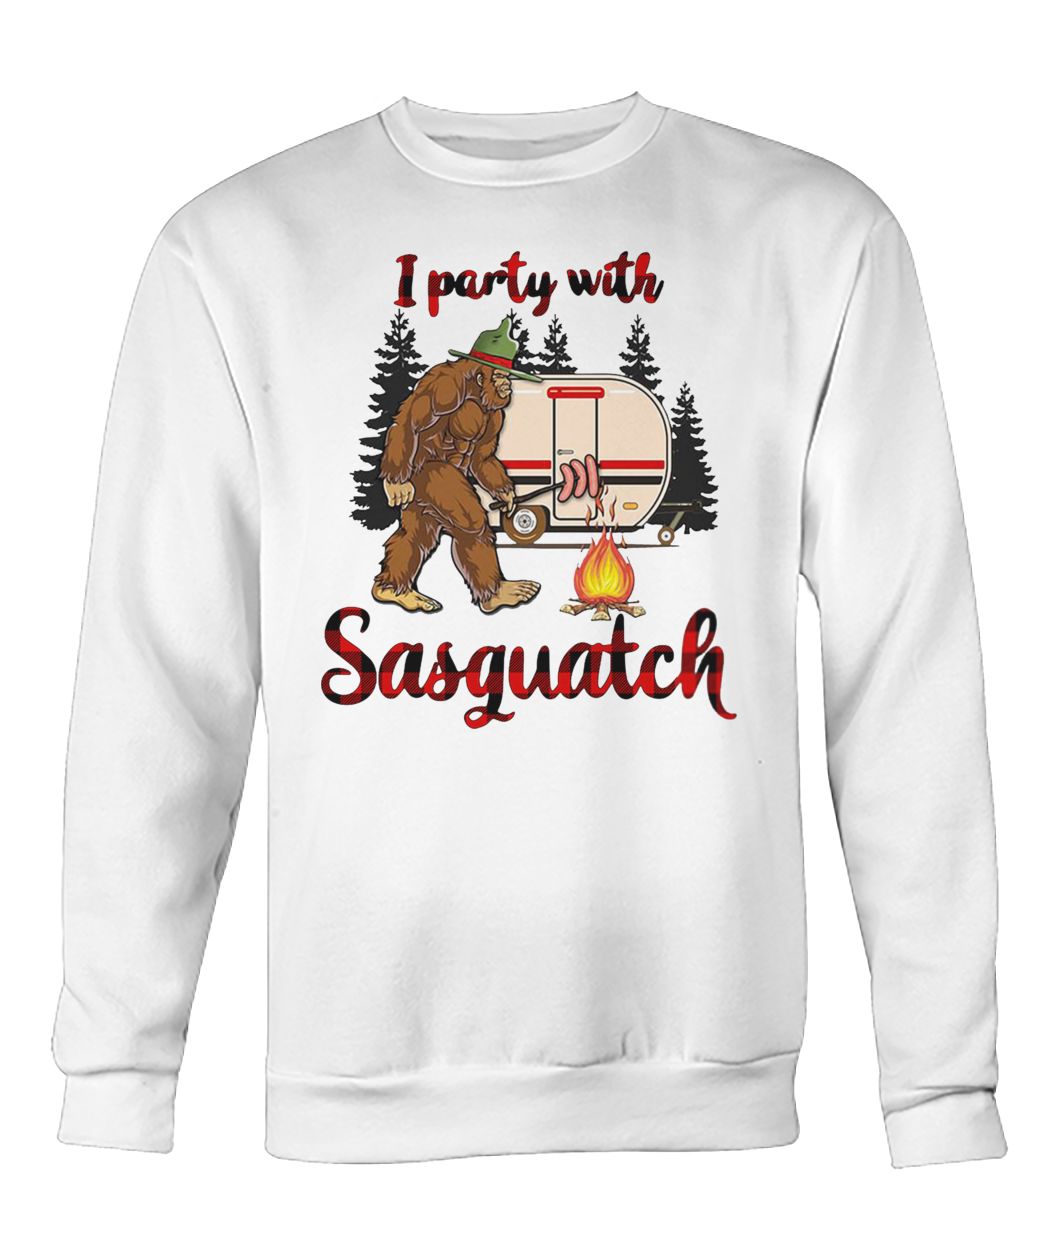 Bigfoot camping I party with sasquatch crew neck sweatshirt